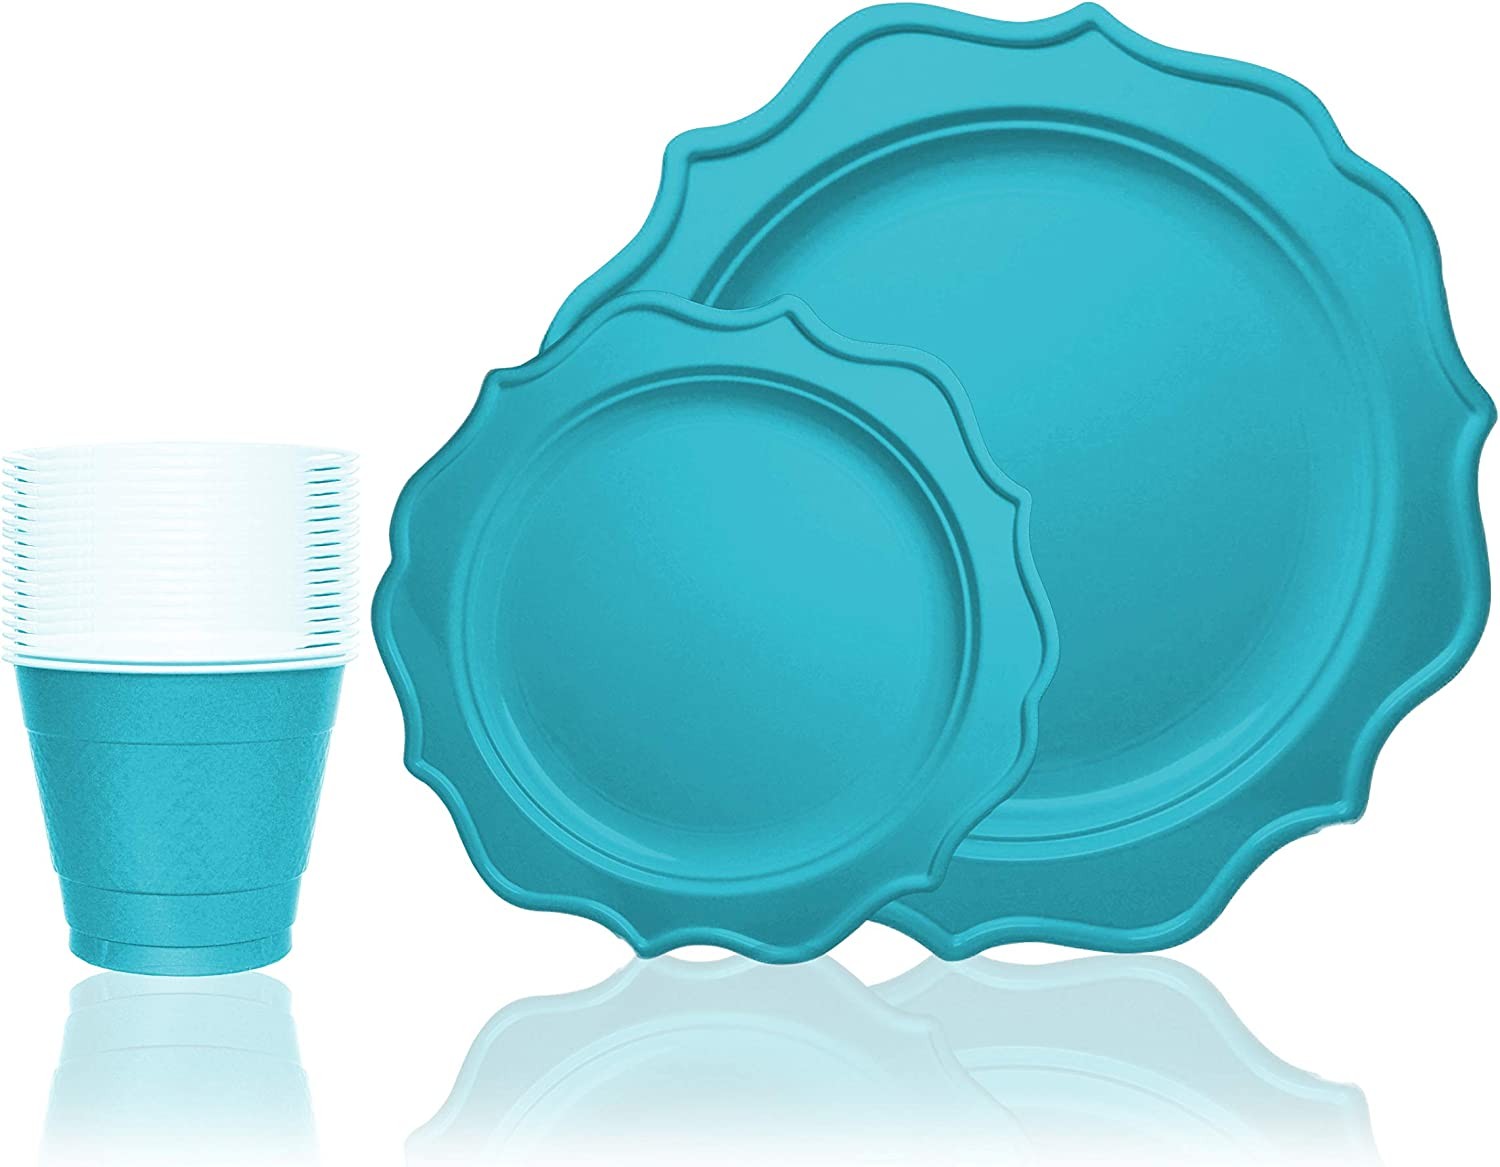 https://www.lionsdeal.com/itempics/TigerChef-Turquoise-Scalloped-Rim-Disposable-Party-Supplies-Set--Includes-10-quot--Plates--8-quot--Plates-and-9-oz--Cups--Service-for-96-52550_xlarge.jpg